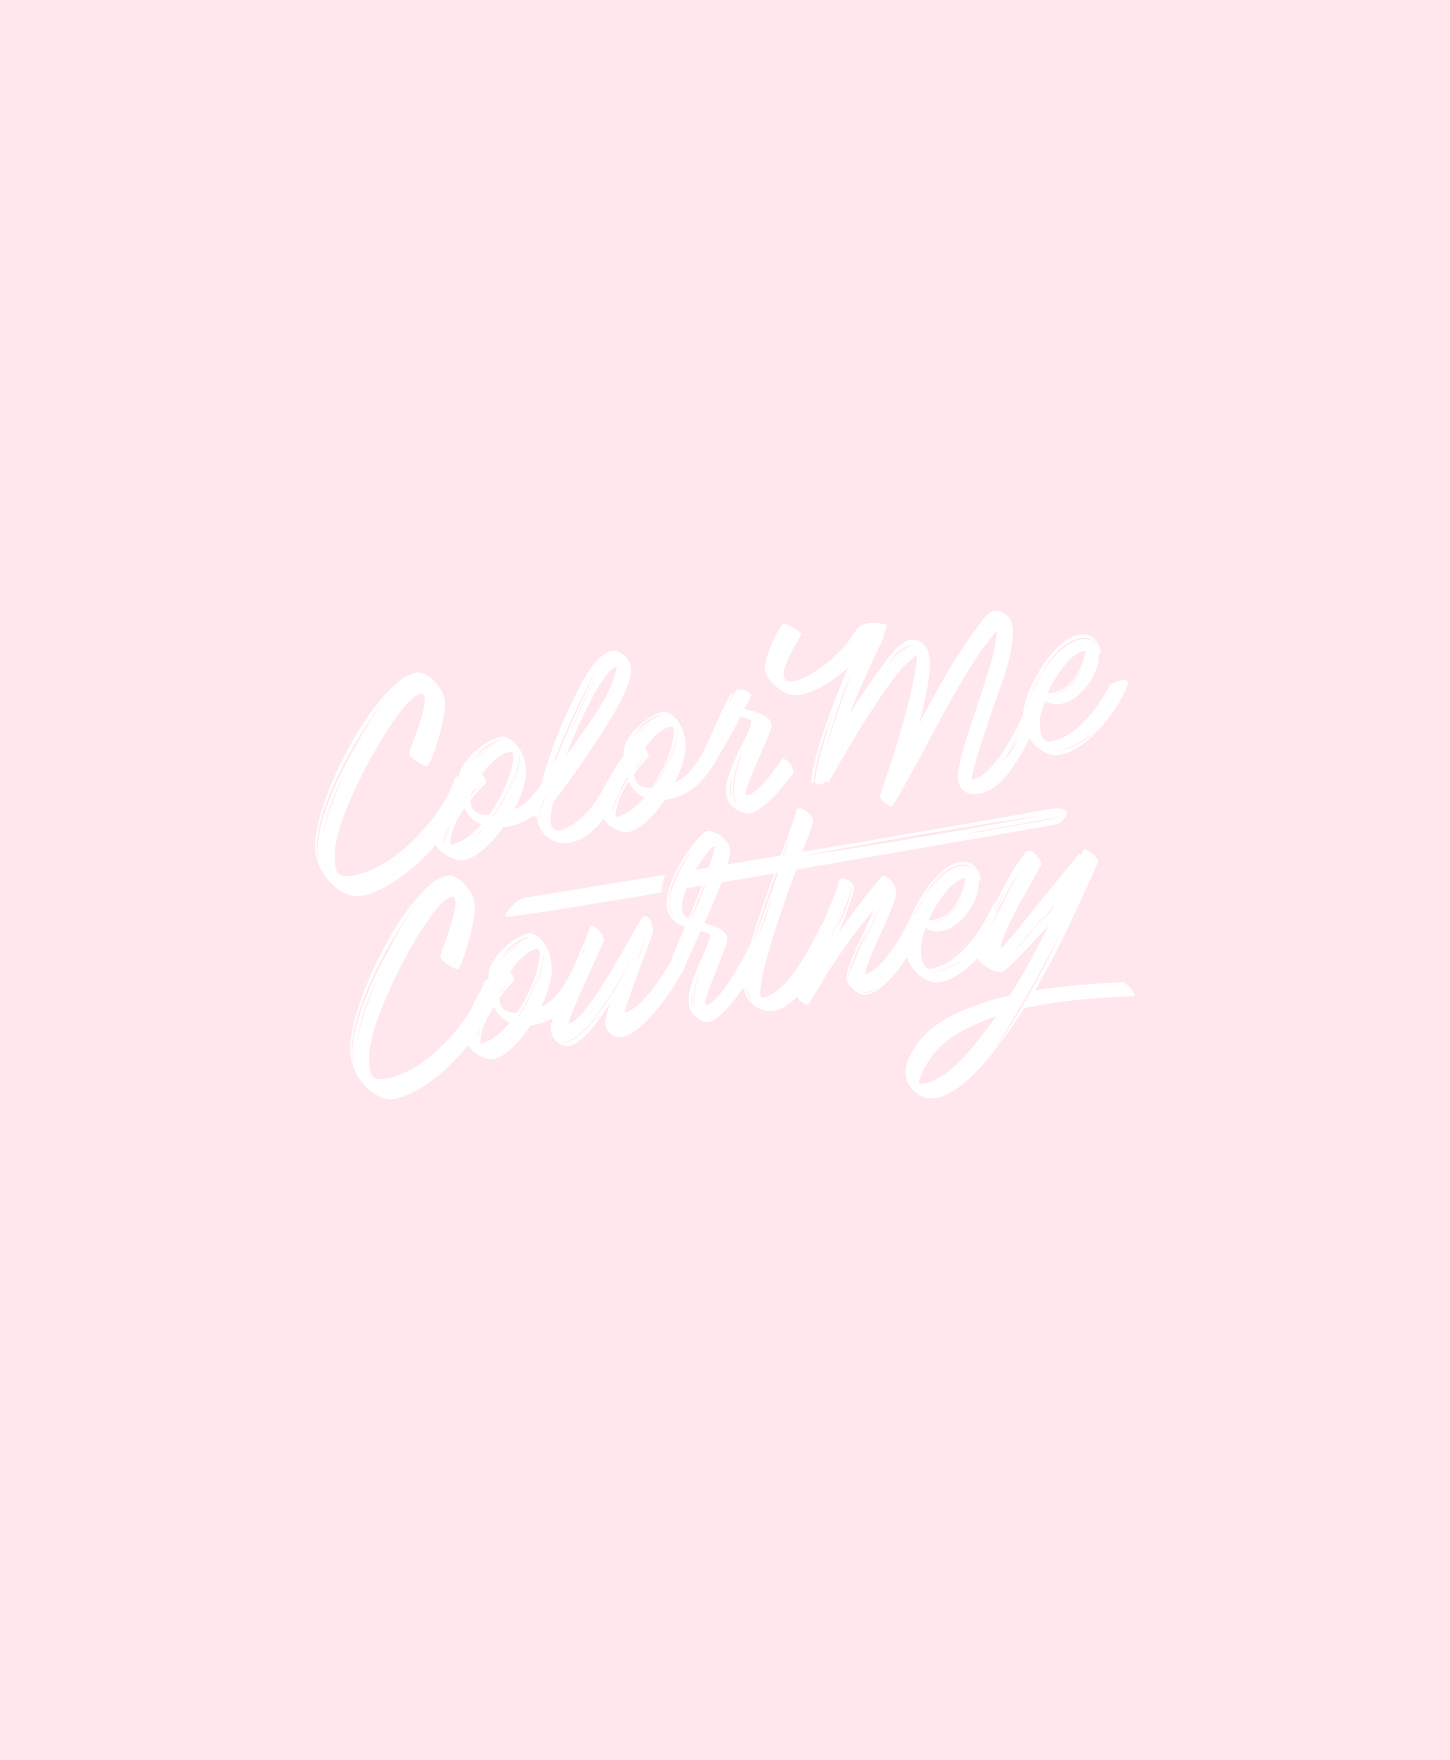 Color Me Courtney - Category: B&W